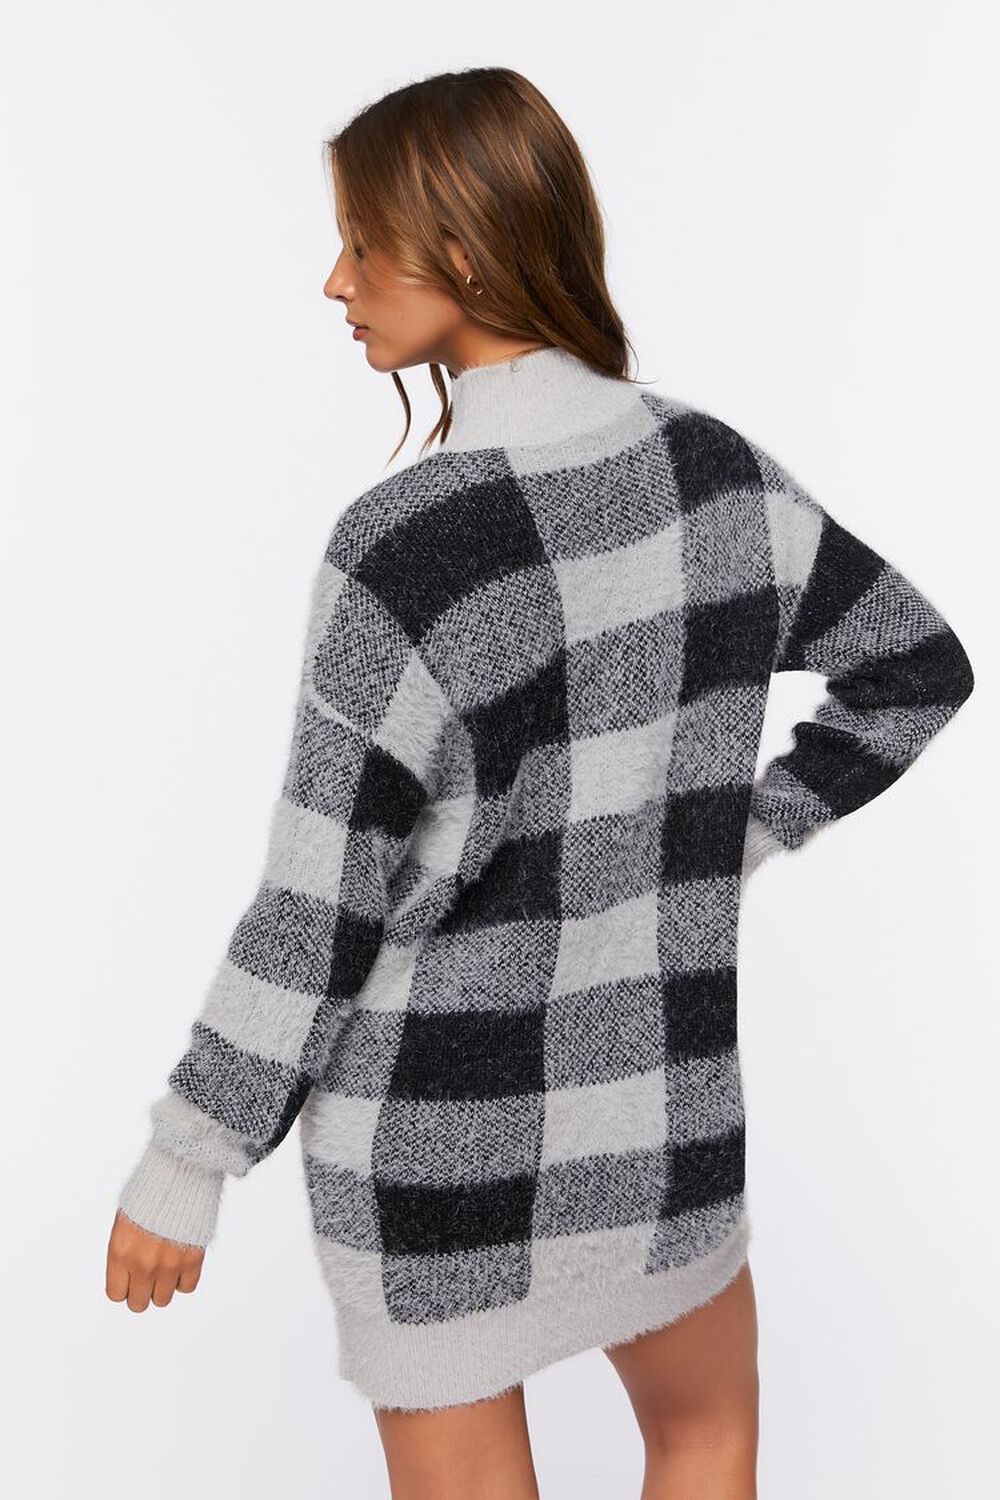 BLACK/GREY Buffalo Plaid Sweater Dress, image 3